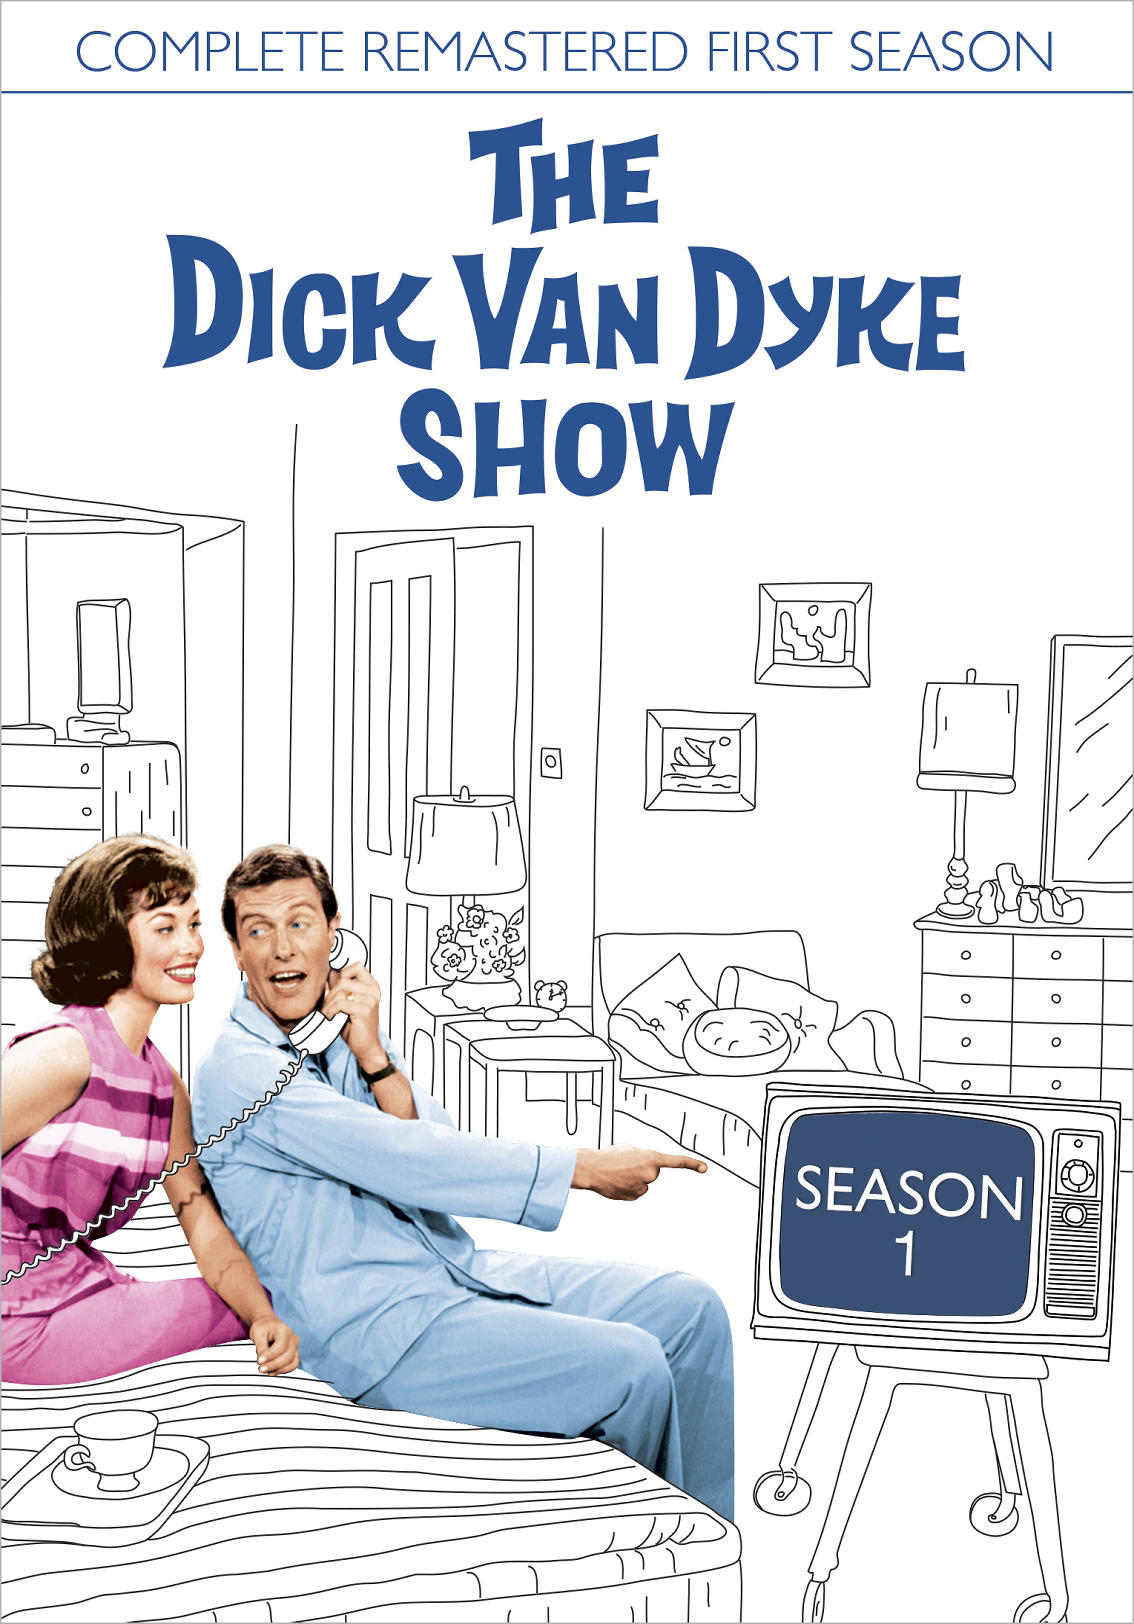 Dick van dyke show season 1 dvd